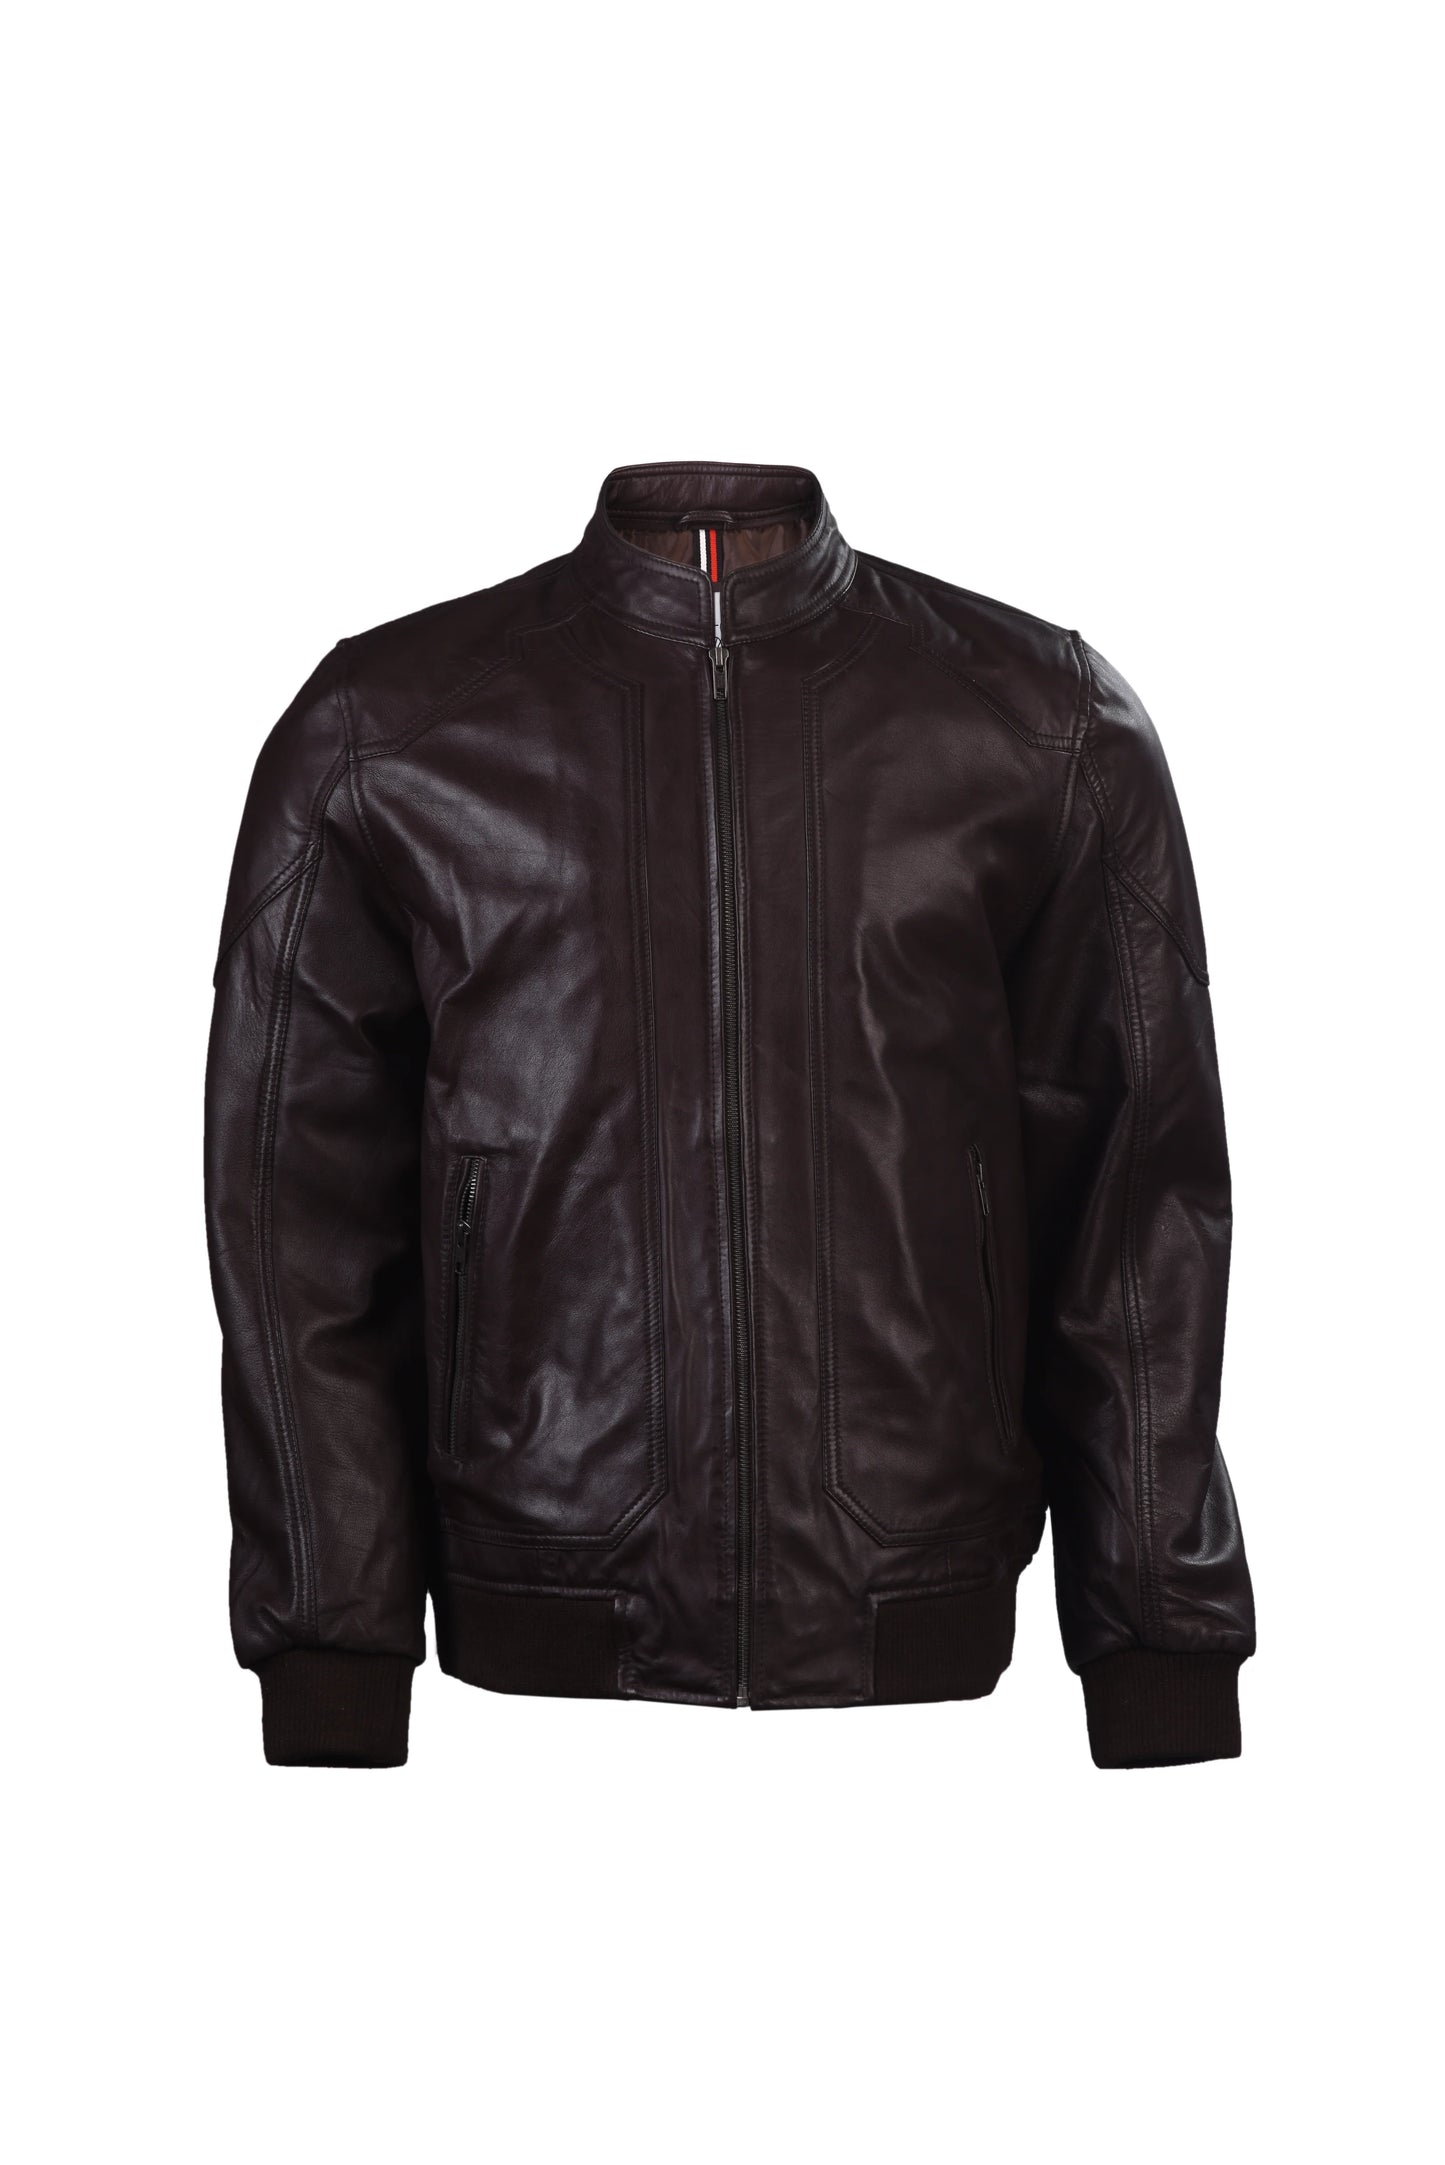 Men's Trucker Real Leather Jacket